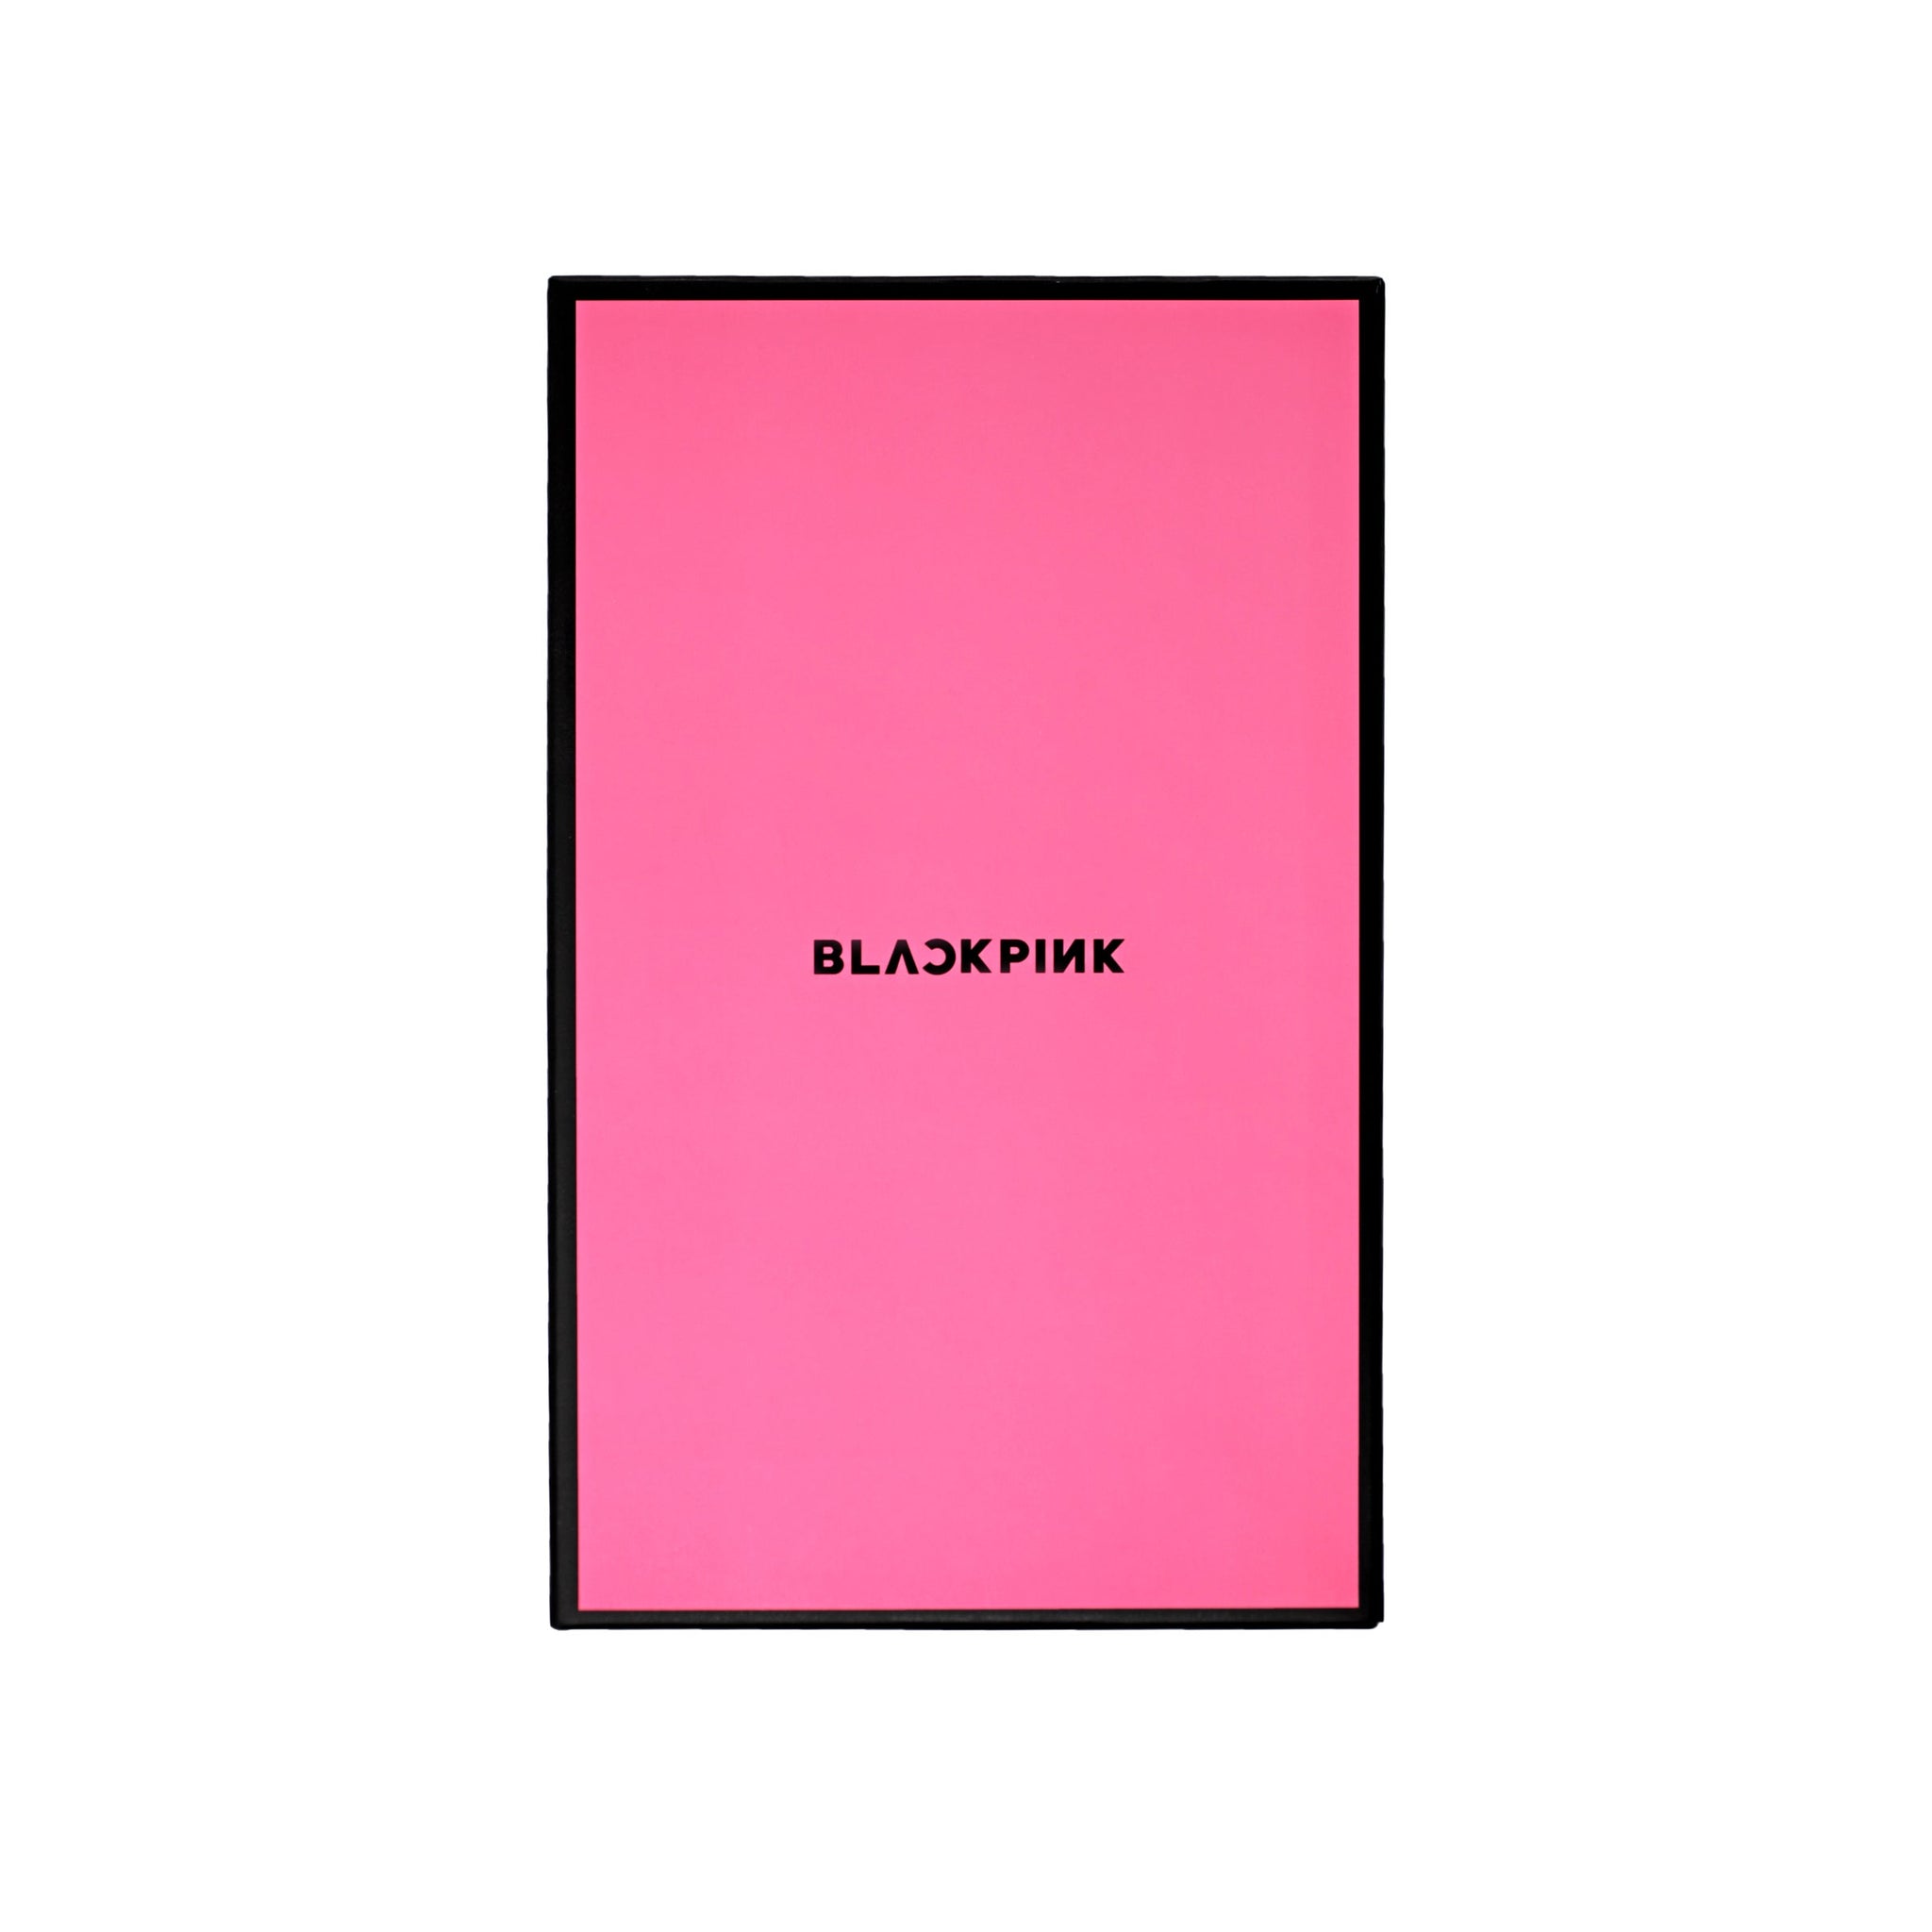 BLACKPINK Official Light Stick [Ver. 2] - K PLACE